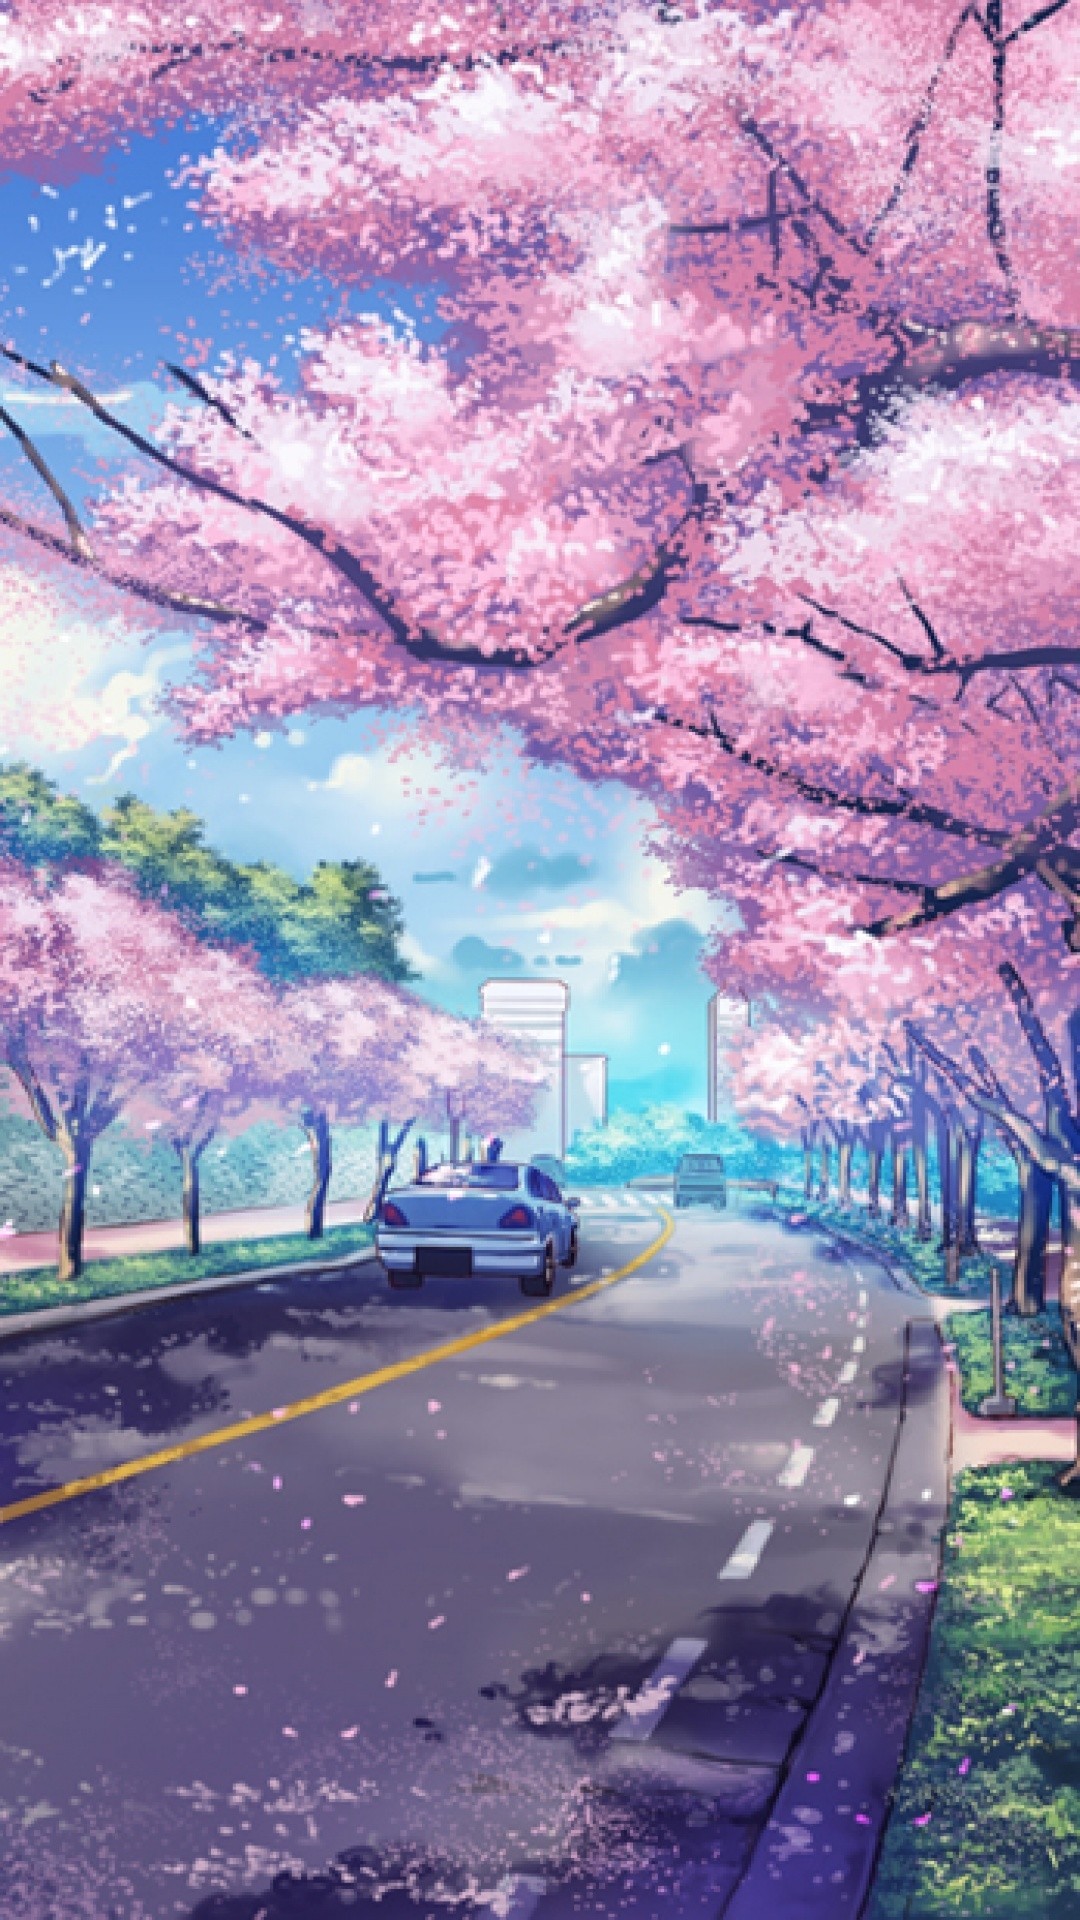 1080x1920 1920x1080 1000+ ideas about Scenery Wallpaper on Pinterest | Anime scenery